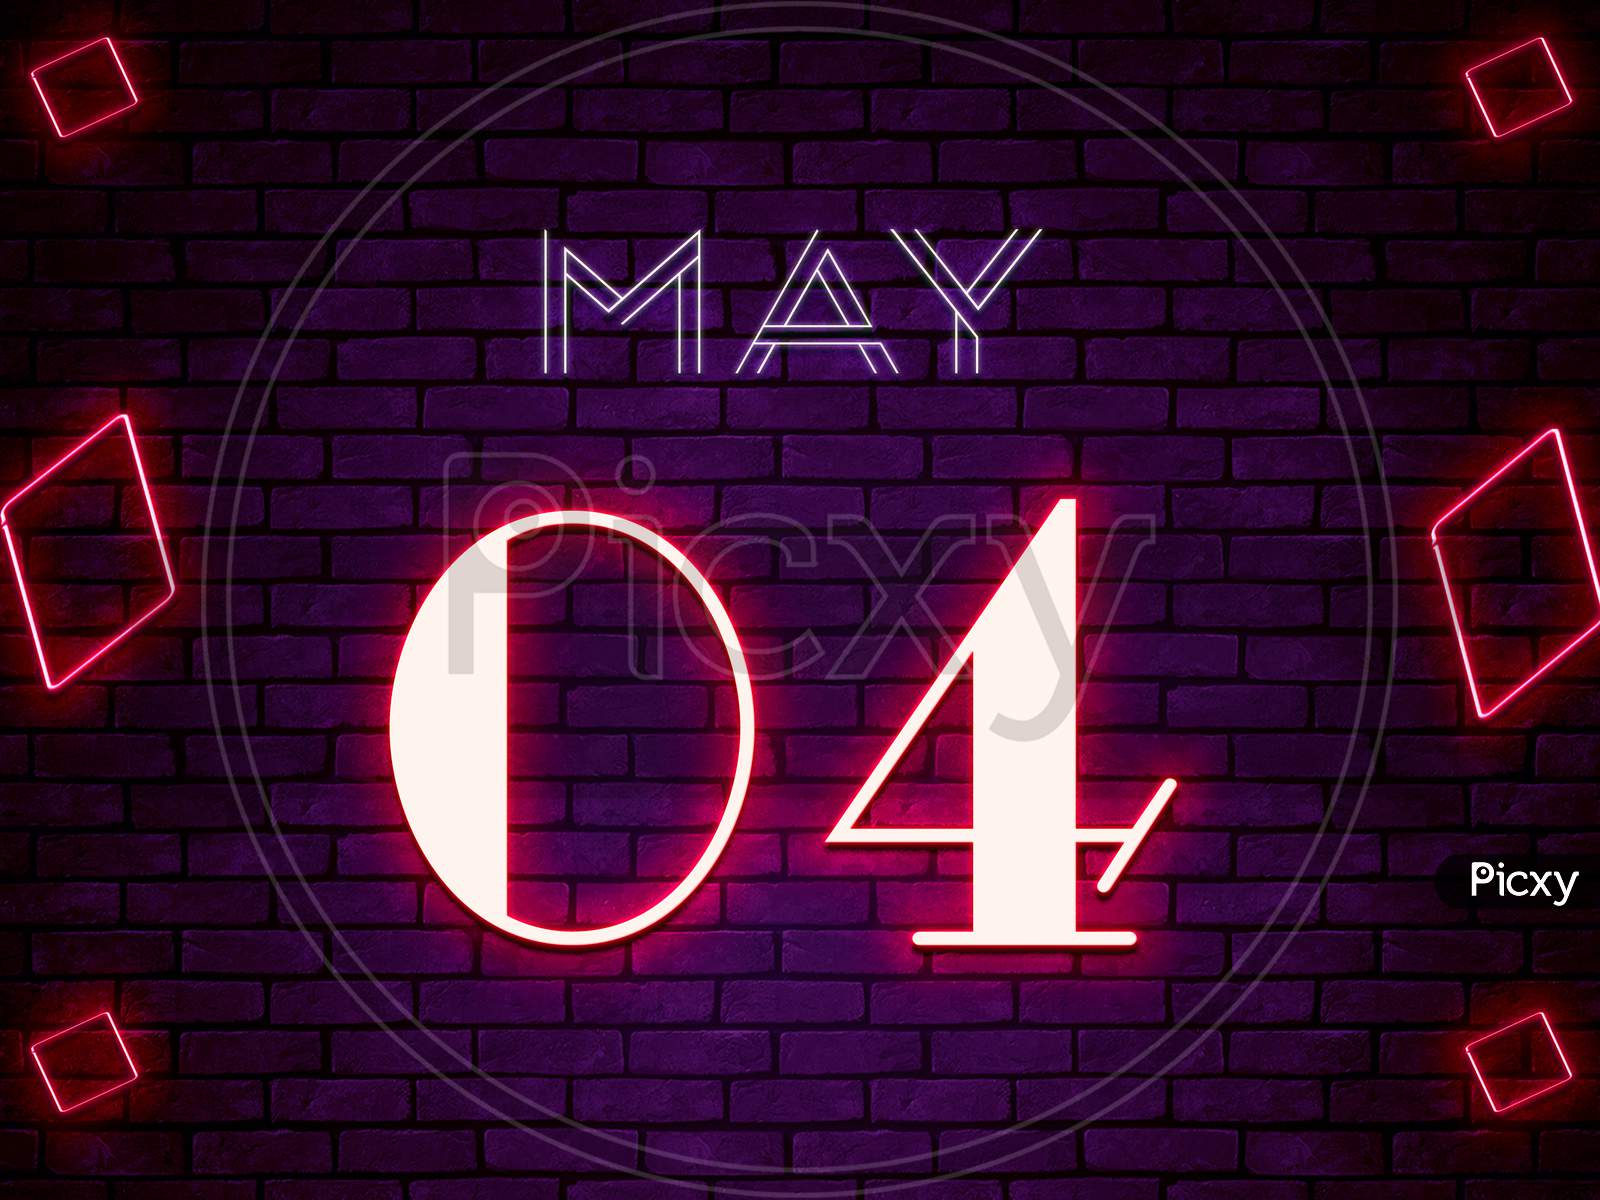 04 May, Monthly Calendar On Bricks Background